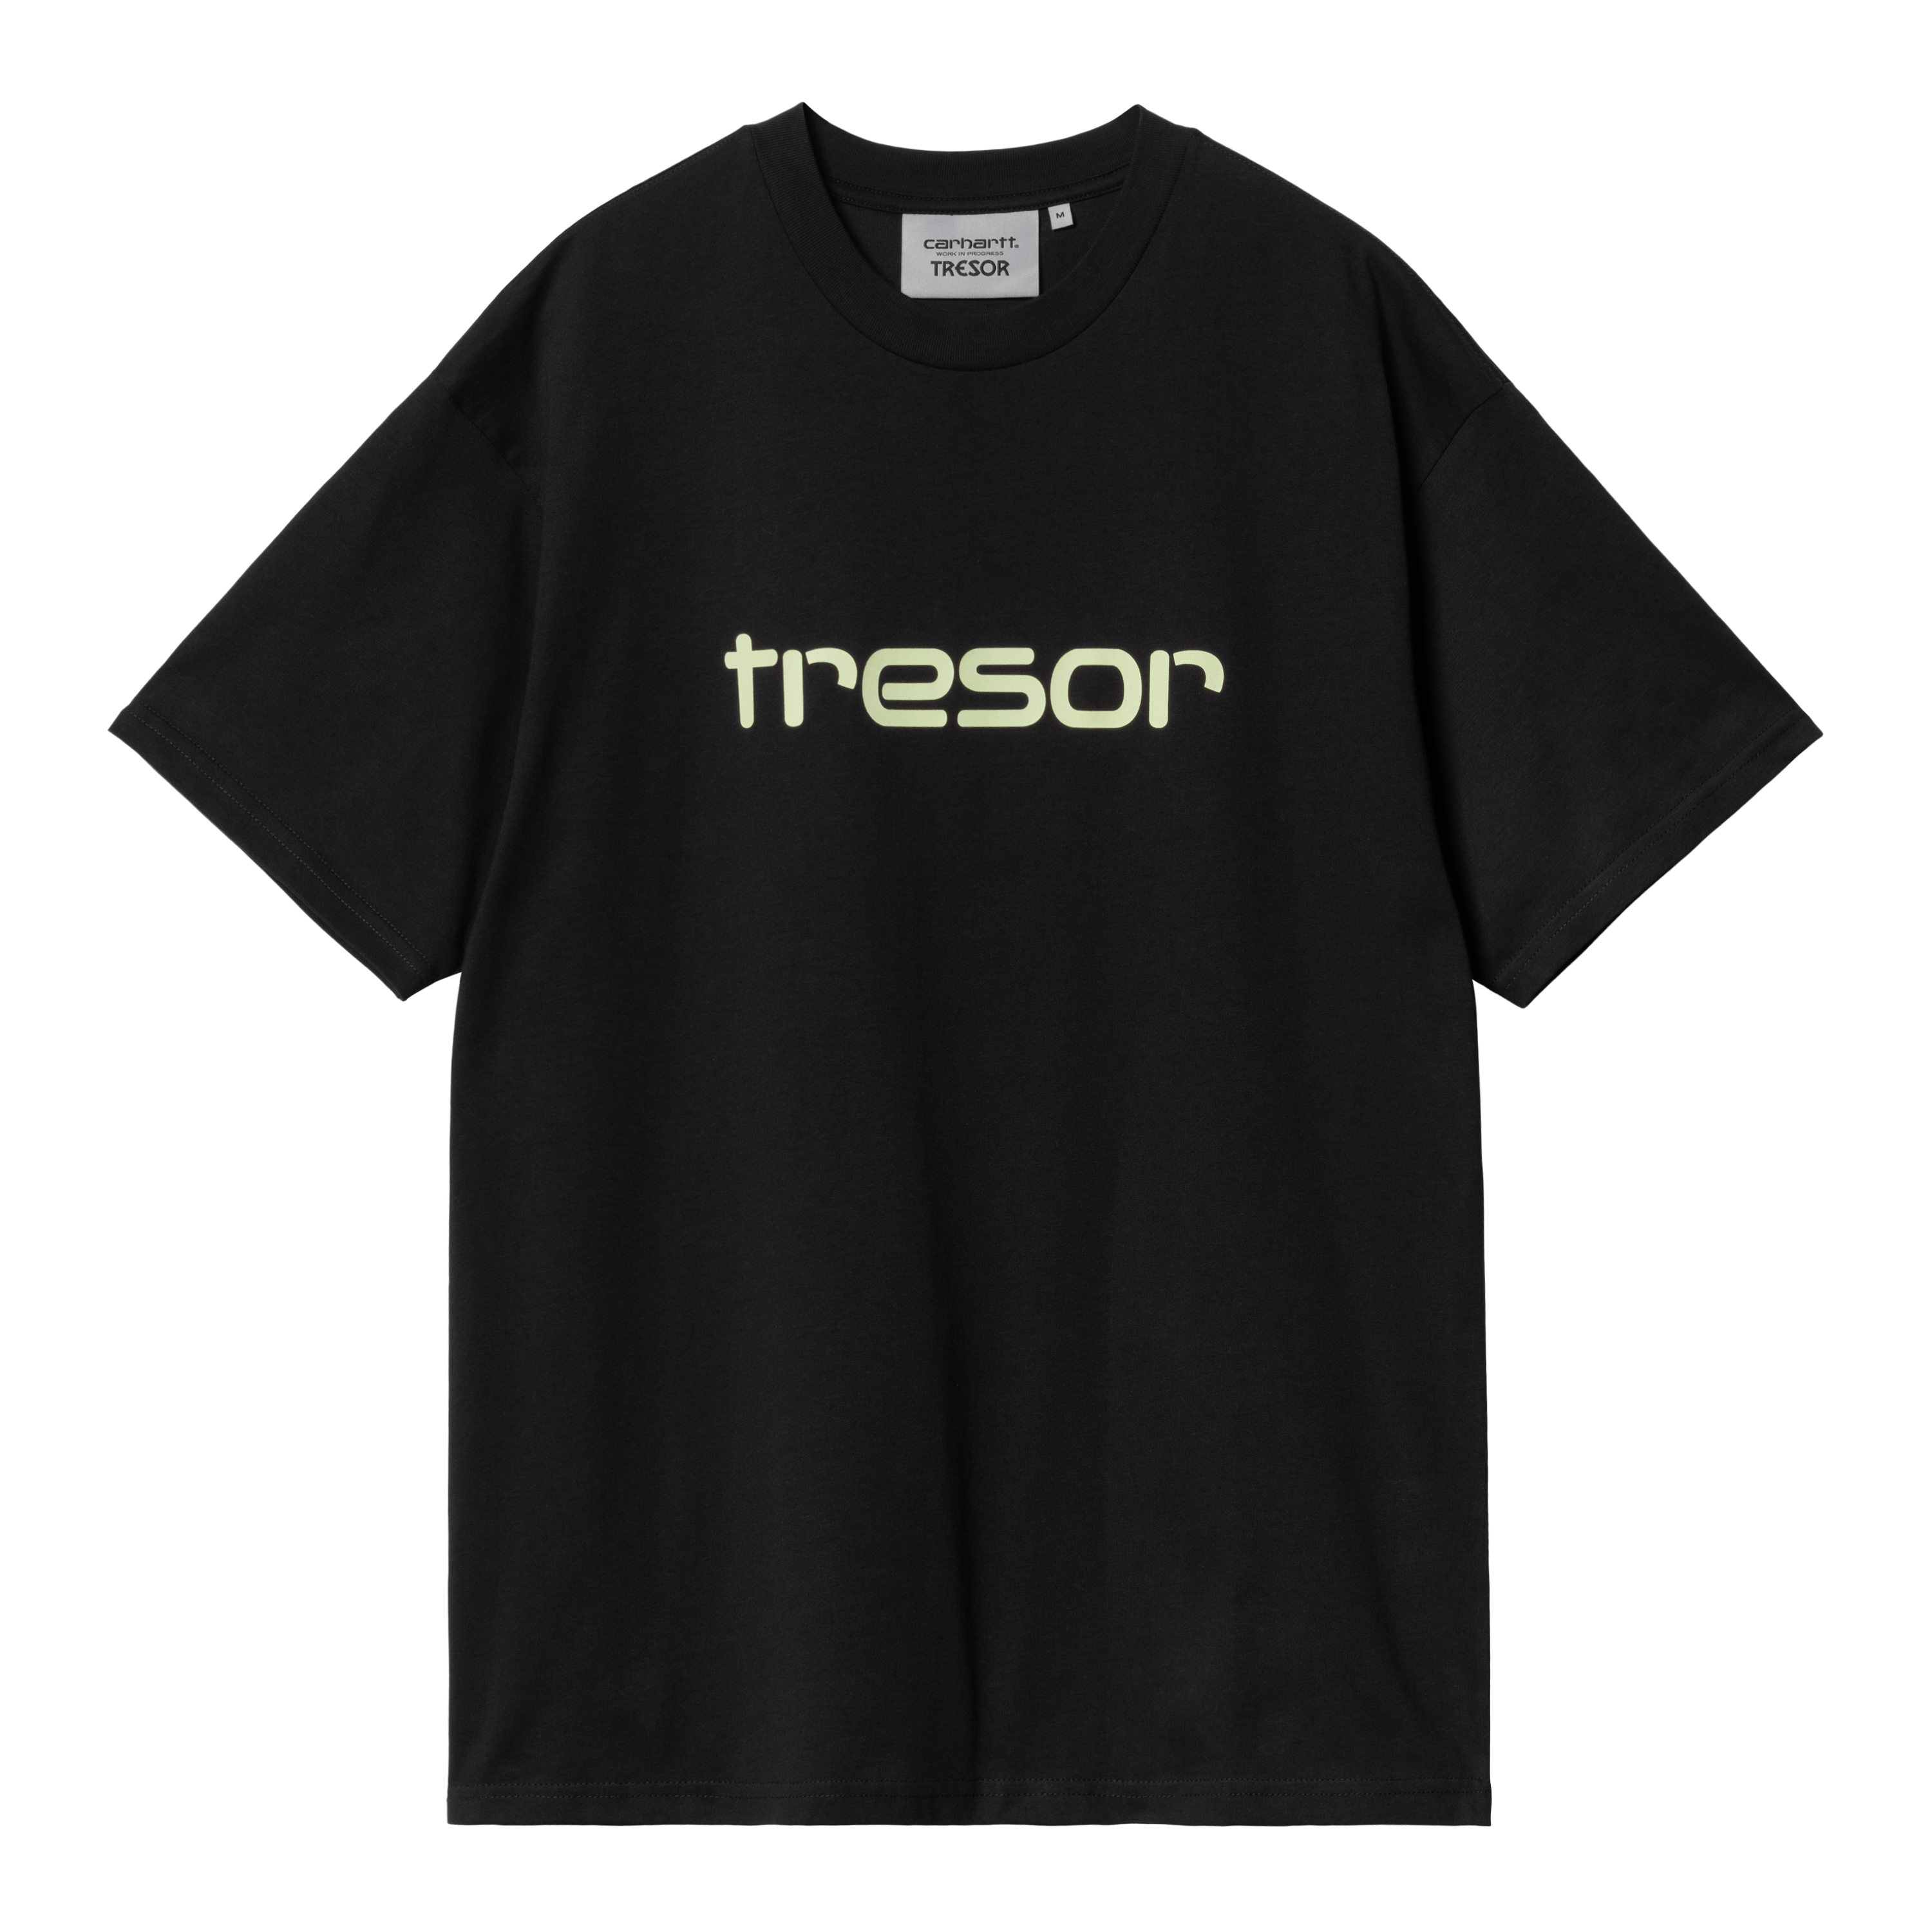 Carhartt WIP Carhartt WIP x TRESOR Techno Alliance Short Sleeve T-Shirt in Nero